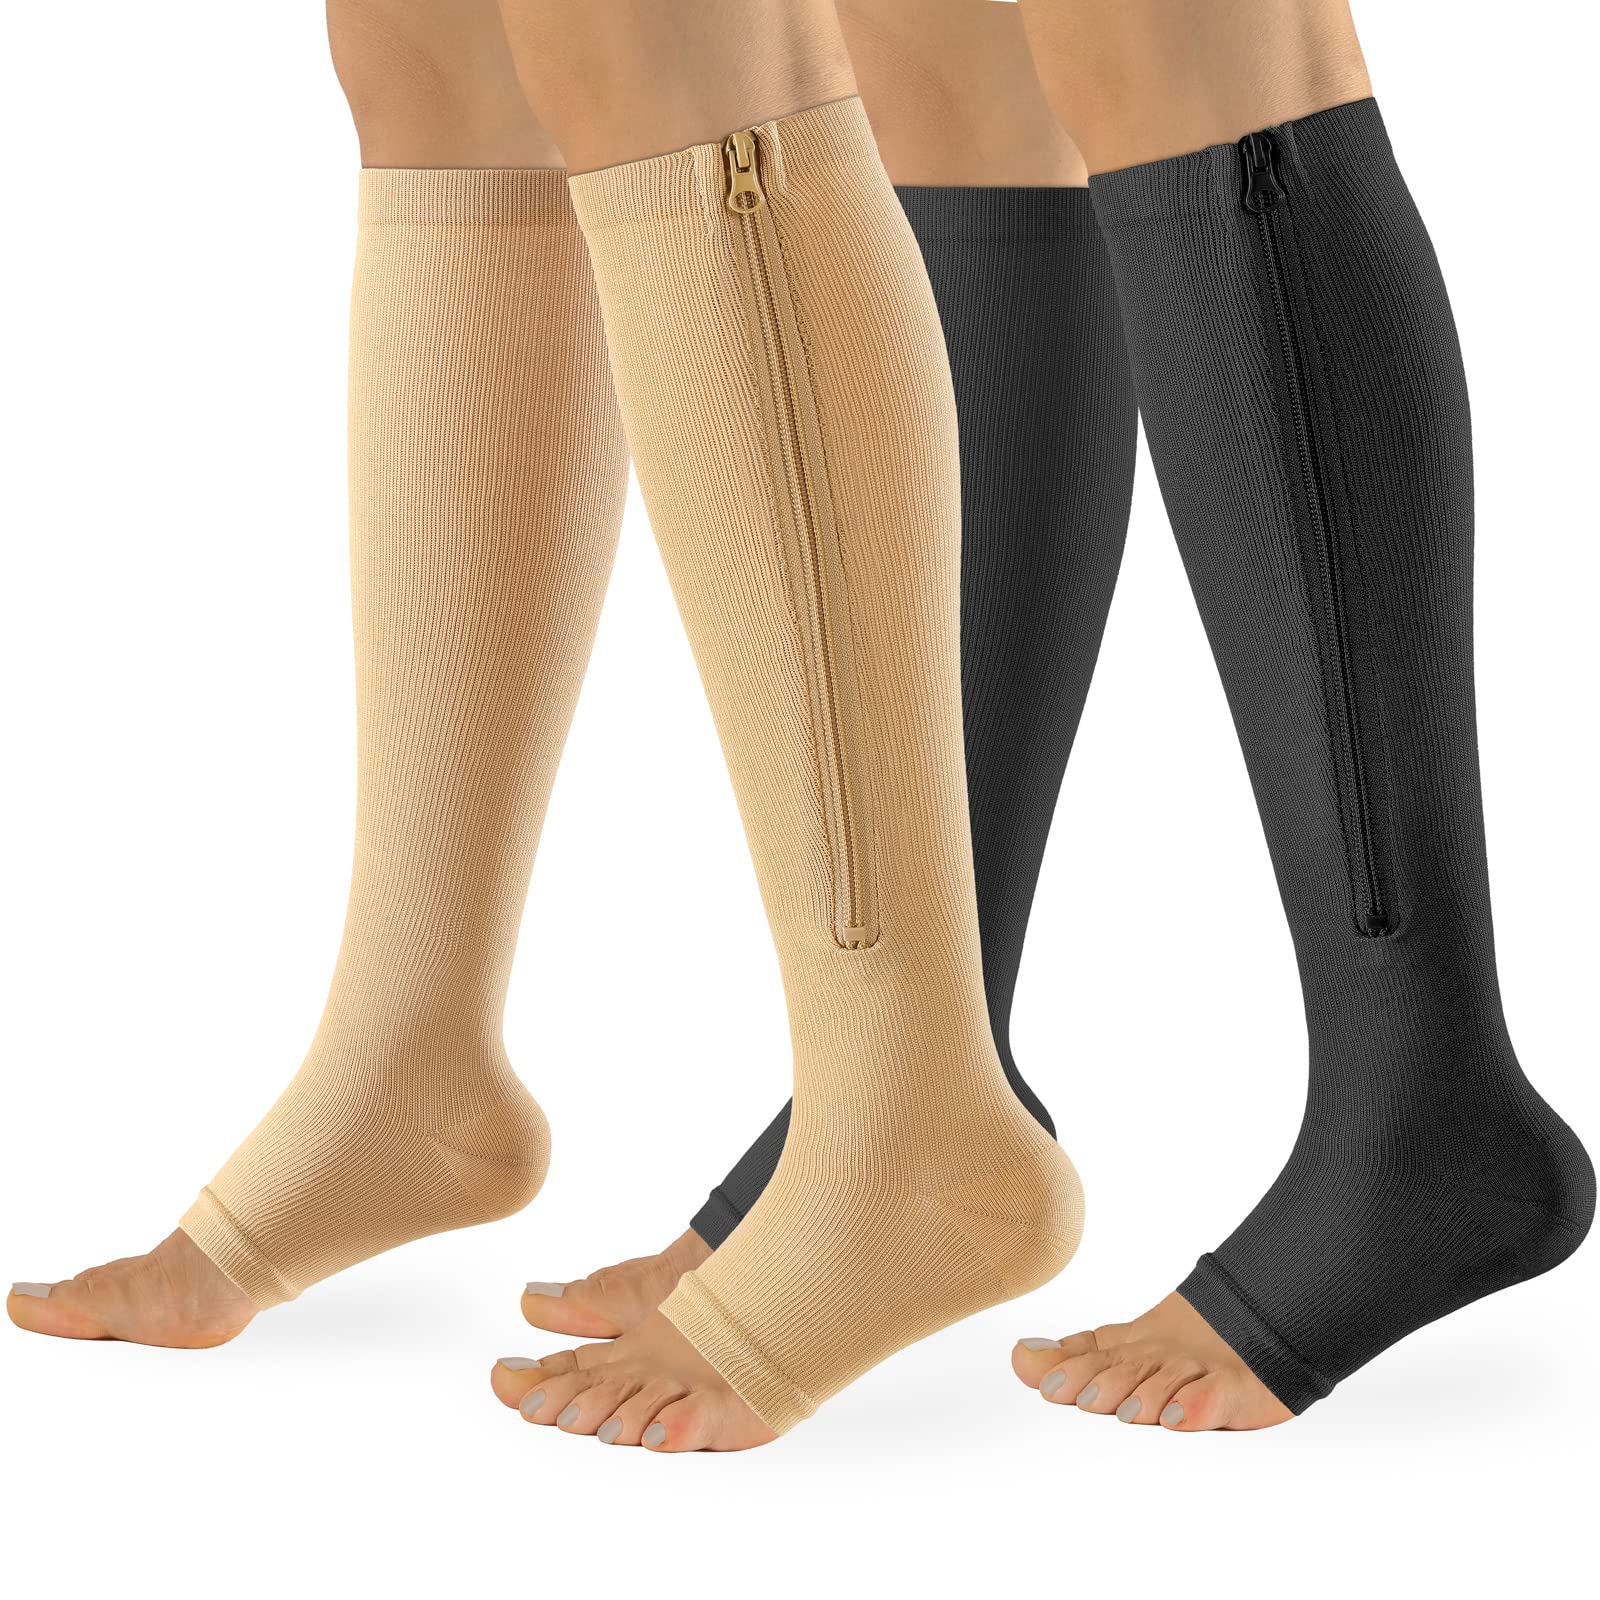 Bropite Zipper Compression Socks Women & Men - 2 Pairs 15-20 mmHg